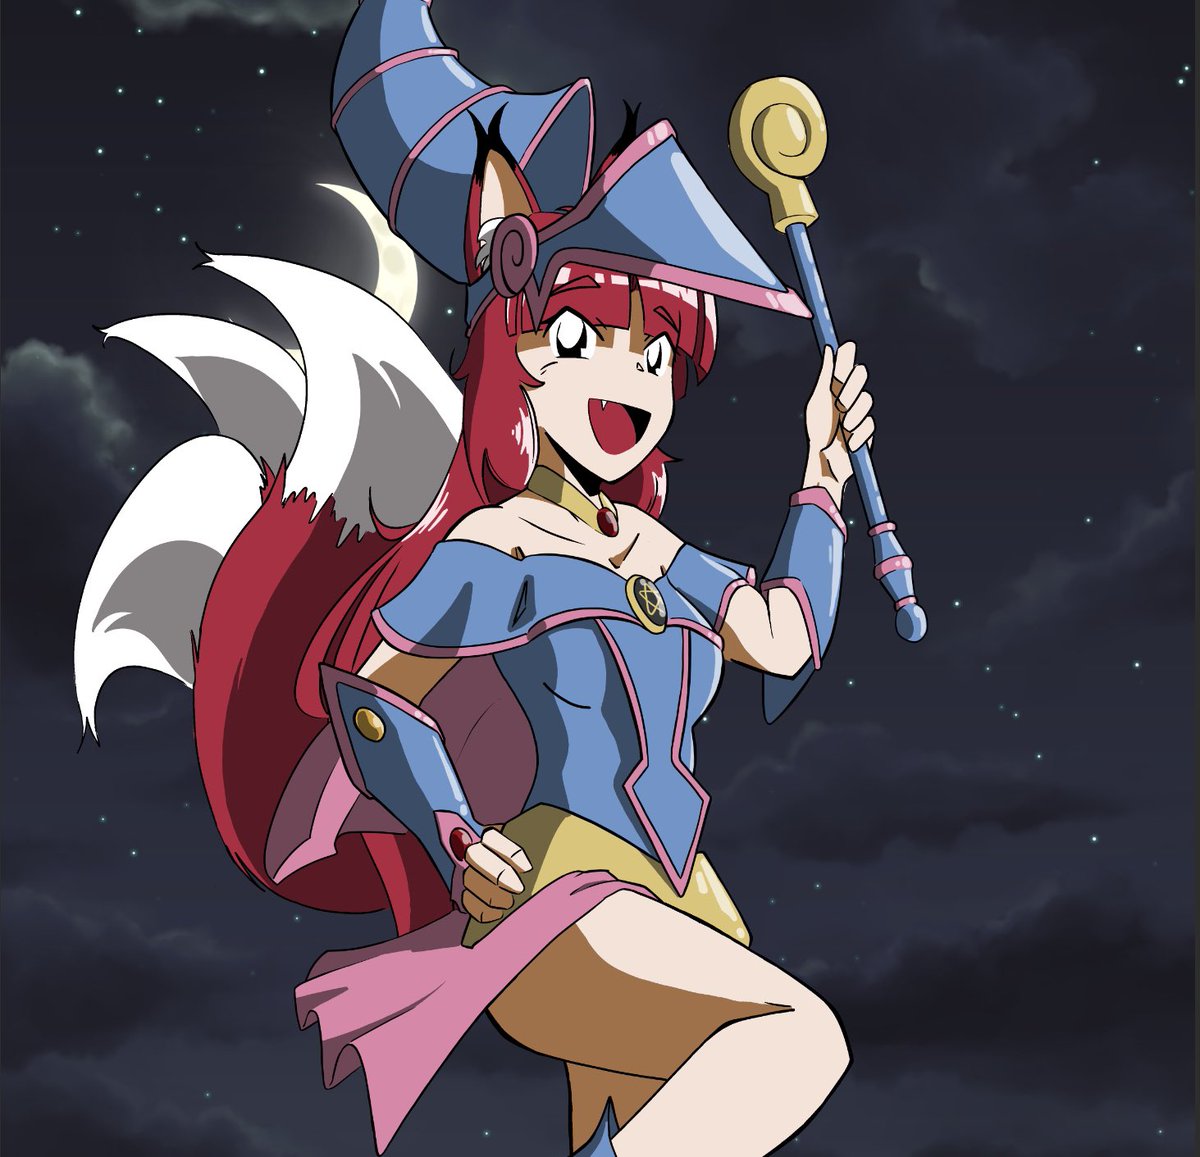 Redressing Rinka for @AnimeEvolution6 ‘s upcoming Yu-gi-oh tournament. I wonder how many Attack Points a “Dark Magician Fox-Girl” could have? #yugioh #animeconvention #dublin #ireland #manga #magician #foxgirl